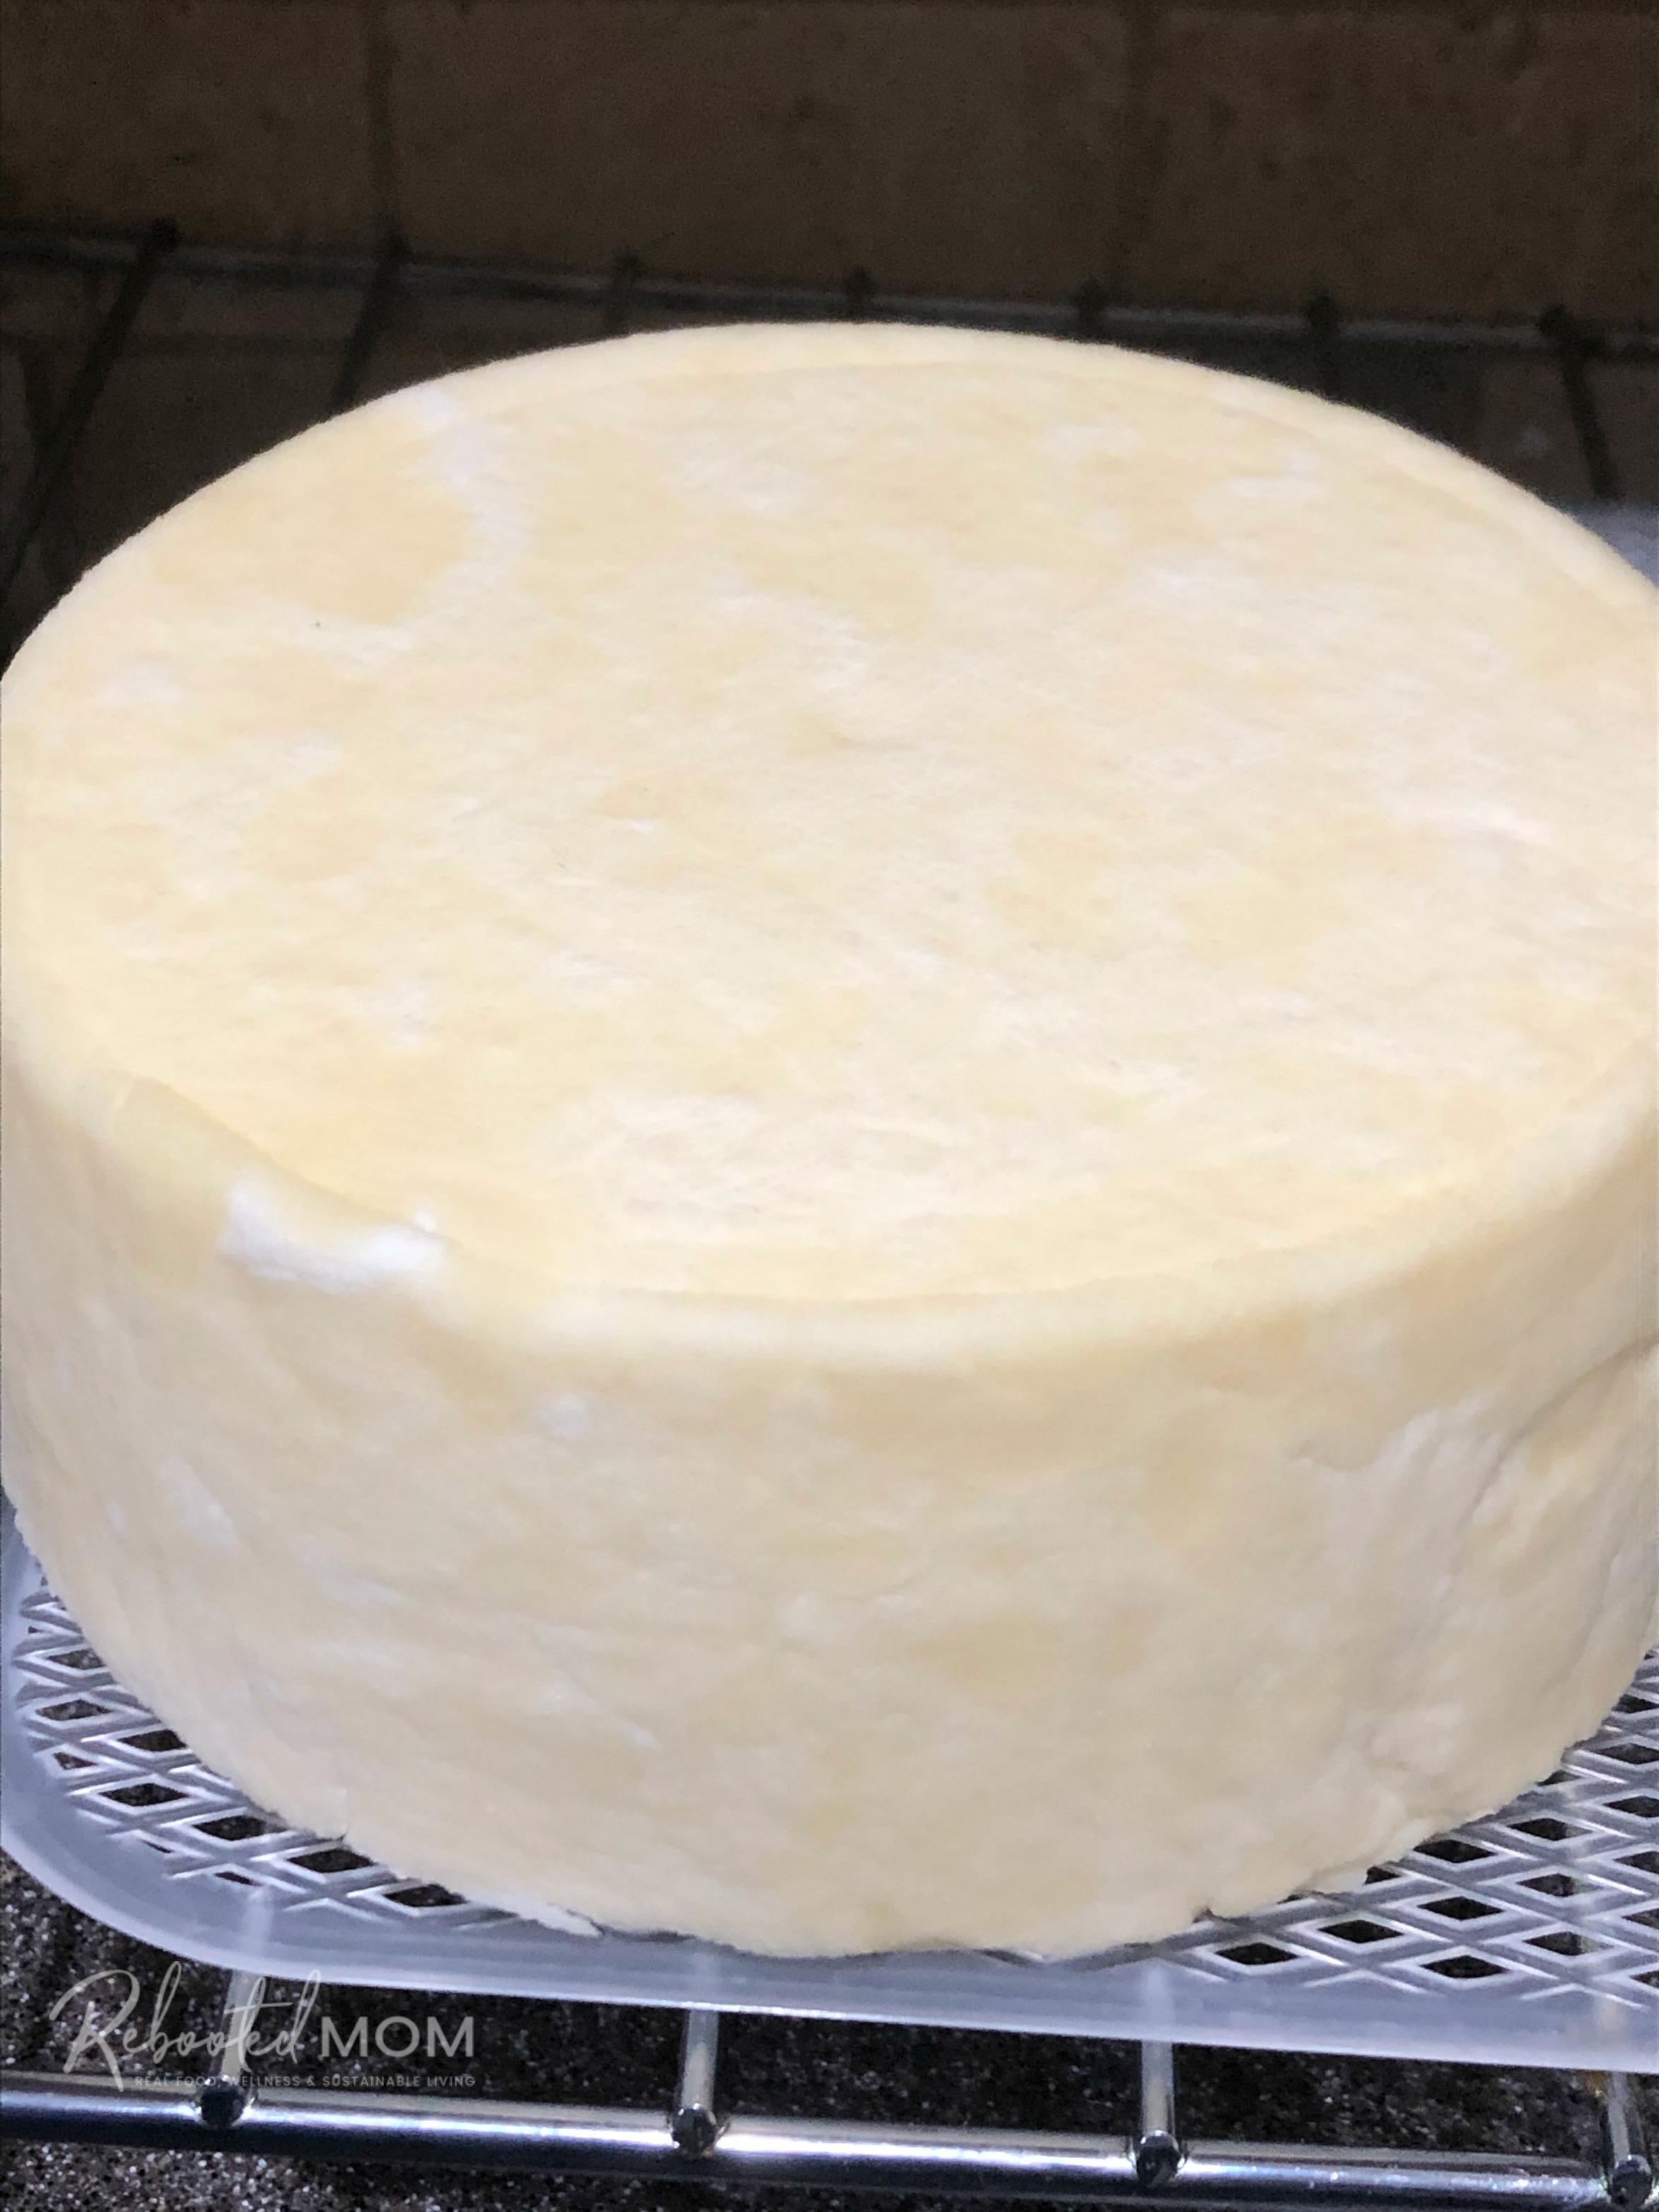 Monterey Jack Cheese - brine the cheese